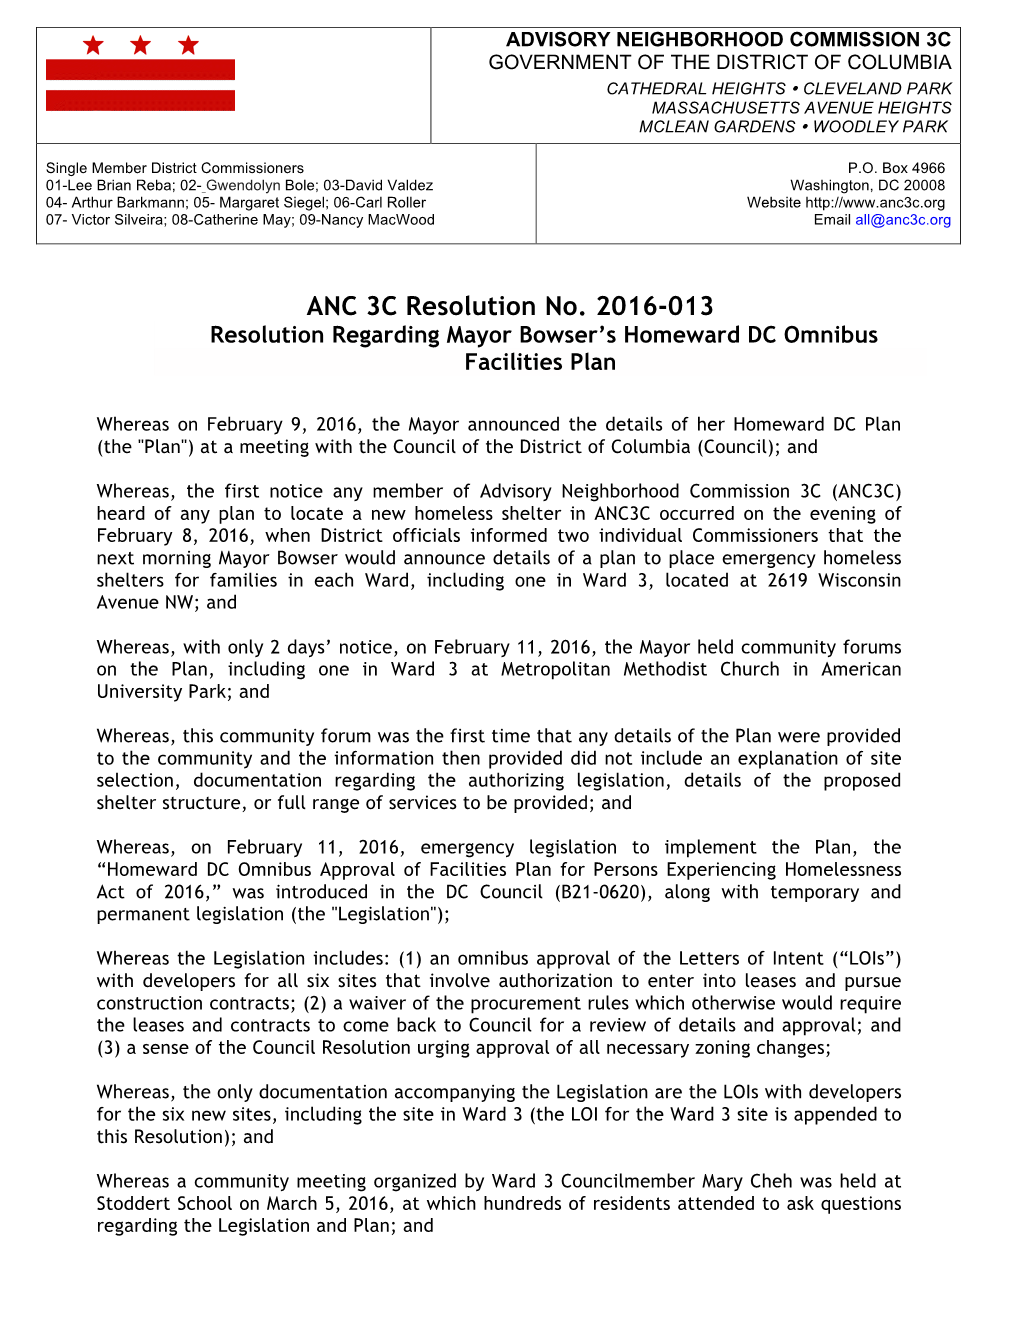 ANC 3C Resolution No. 2016-013 Resolution Regarding Mayor Bowser’S Homeward DC Omnibus Facilities Plan